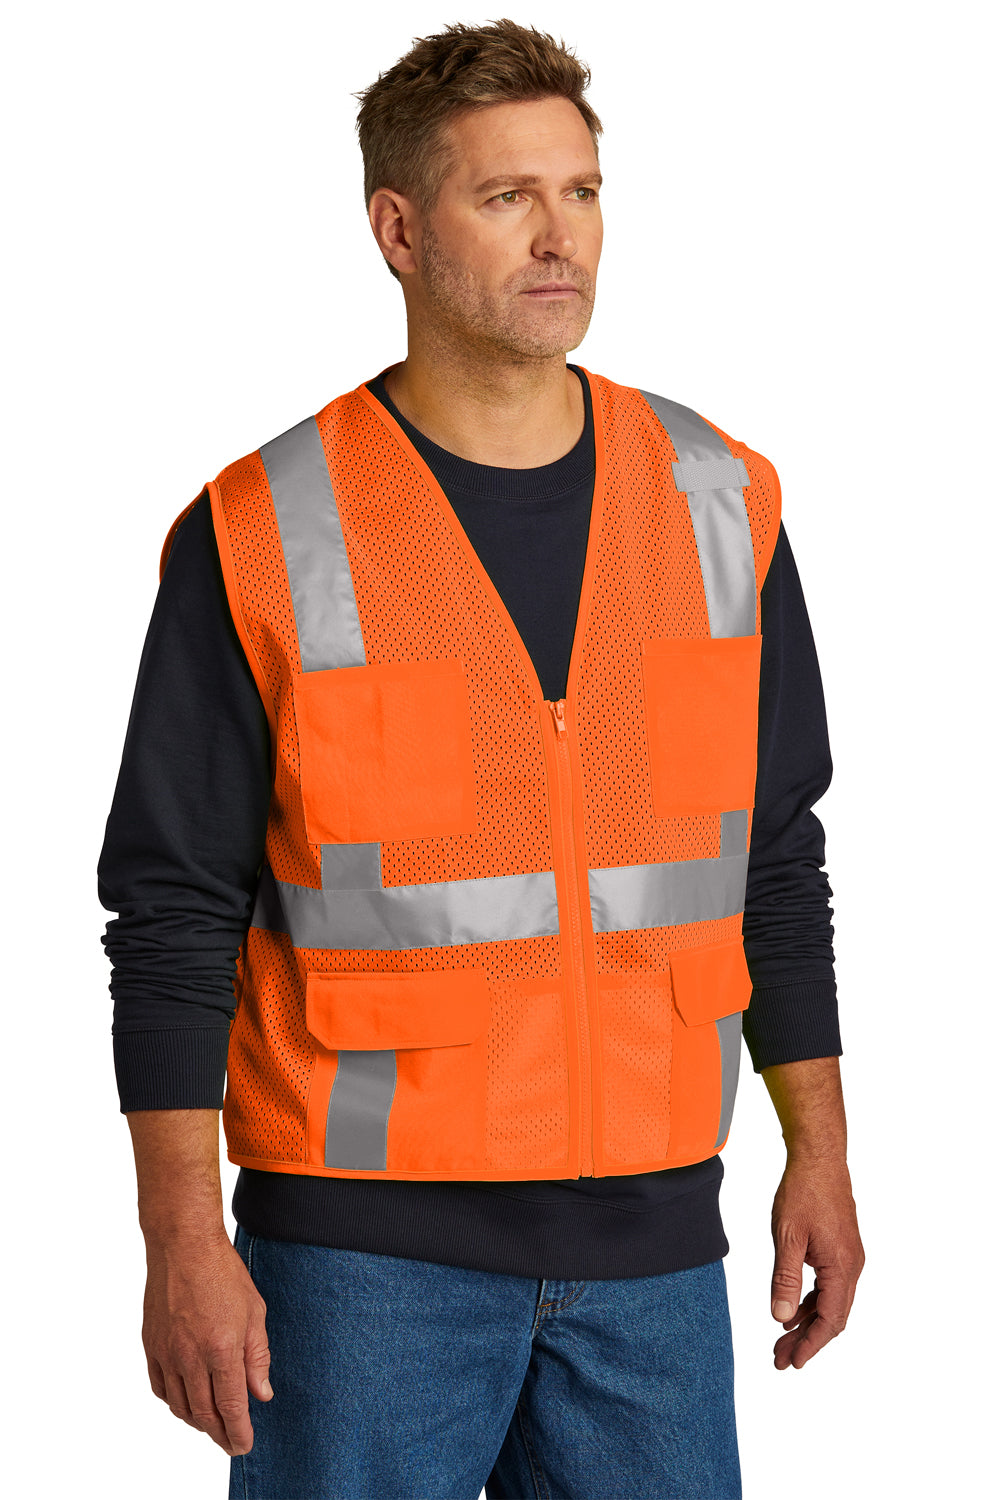 CornerStone CSV104 Mens ANSI 107 Class 2 Mesh Zipper Vest w/ Pocket Safety Orange 3Q